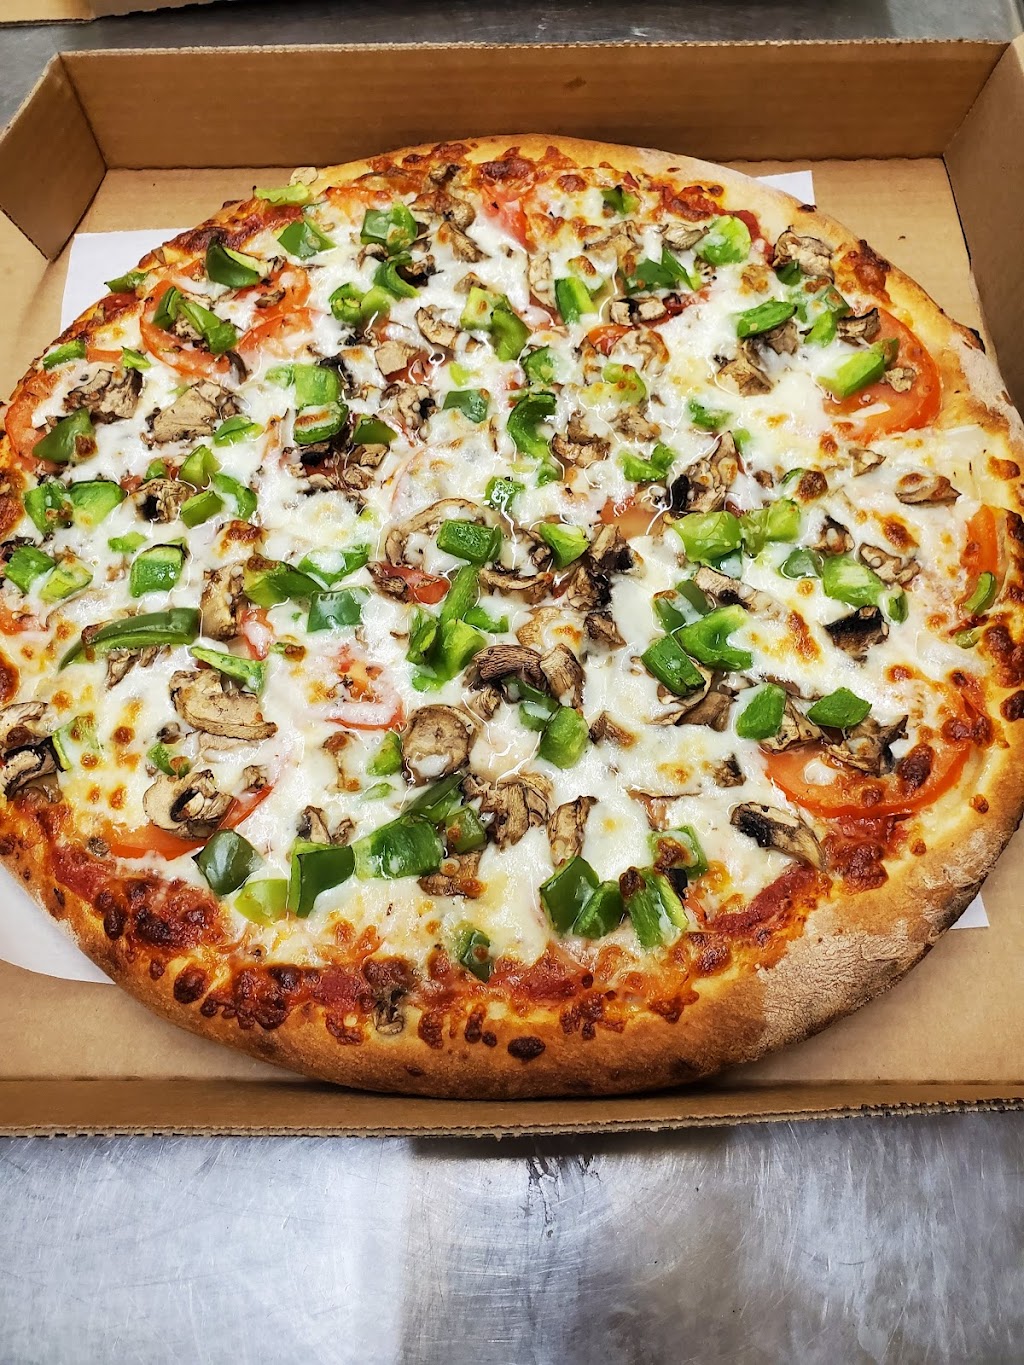 Italian Pizza Rosa | 2825 Lincoln Ave, Anaheim, CA 92806, USA | Phone: (714) 630-0750